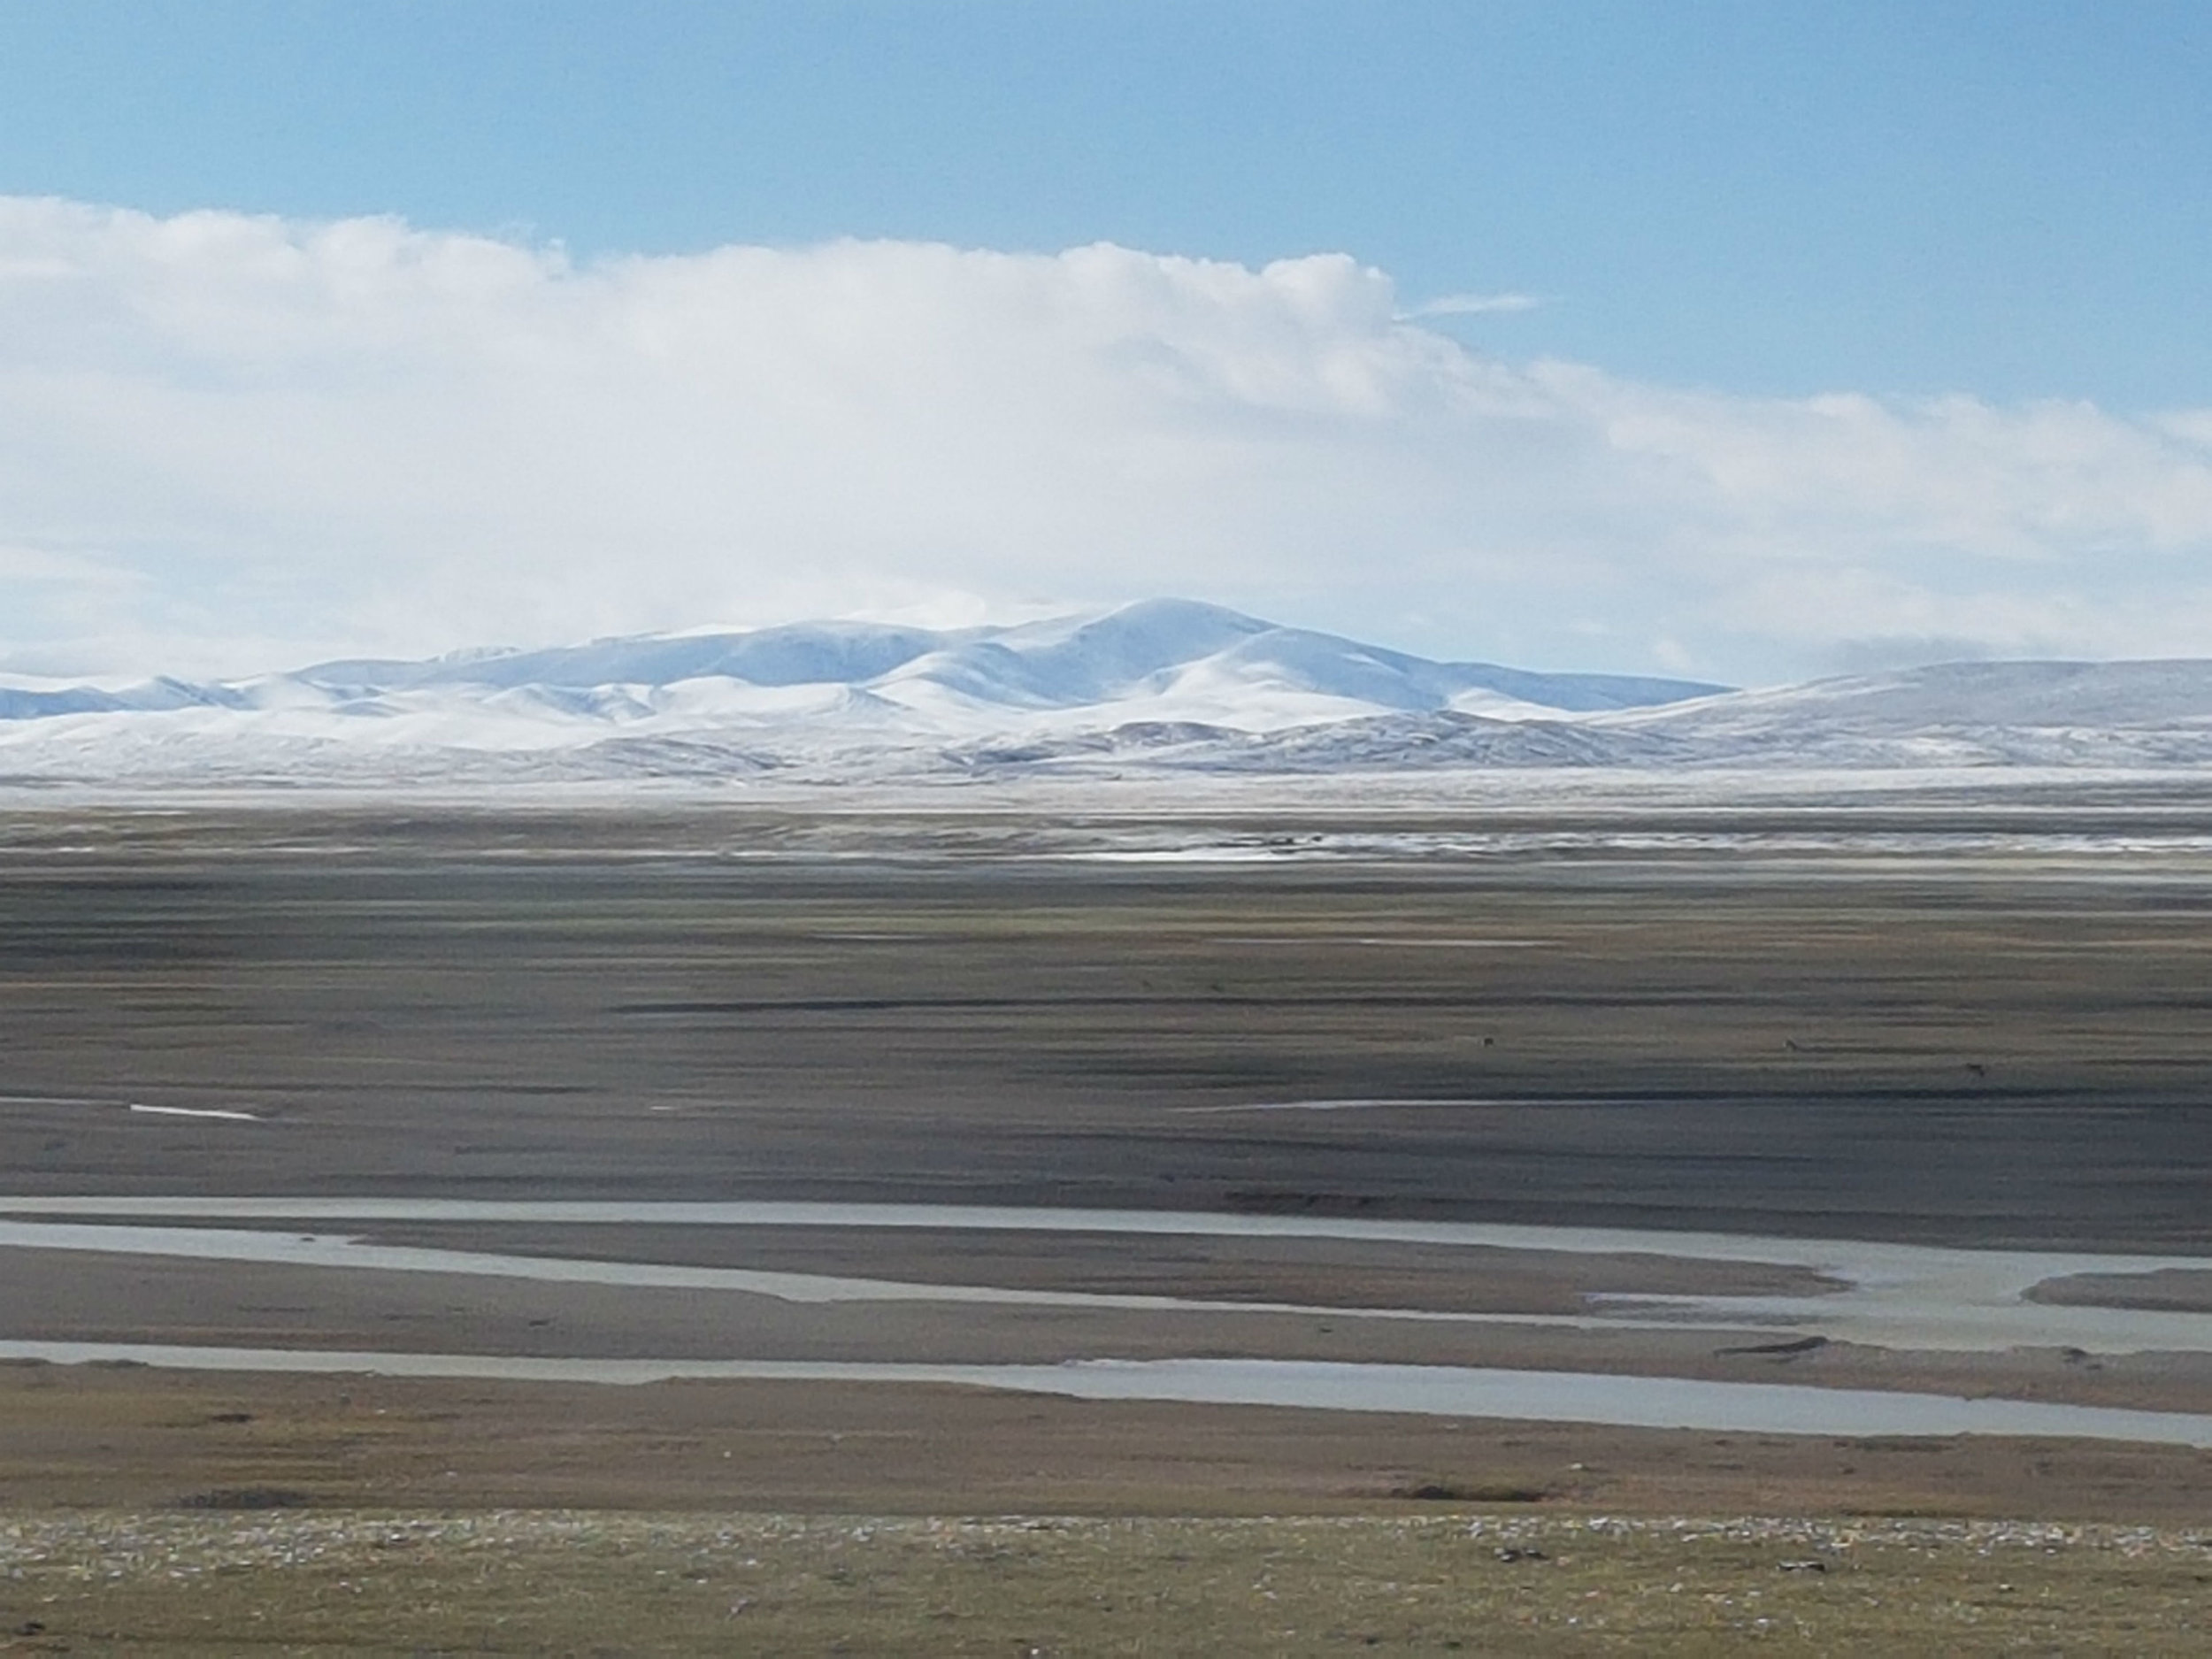 Endless permafrost plains